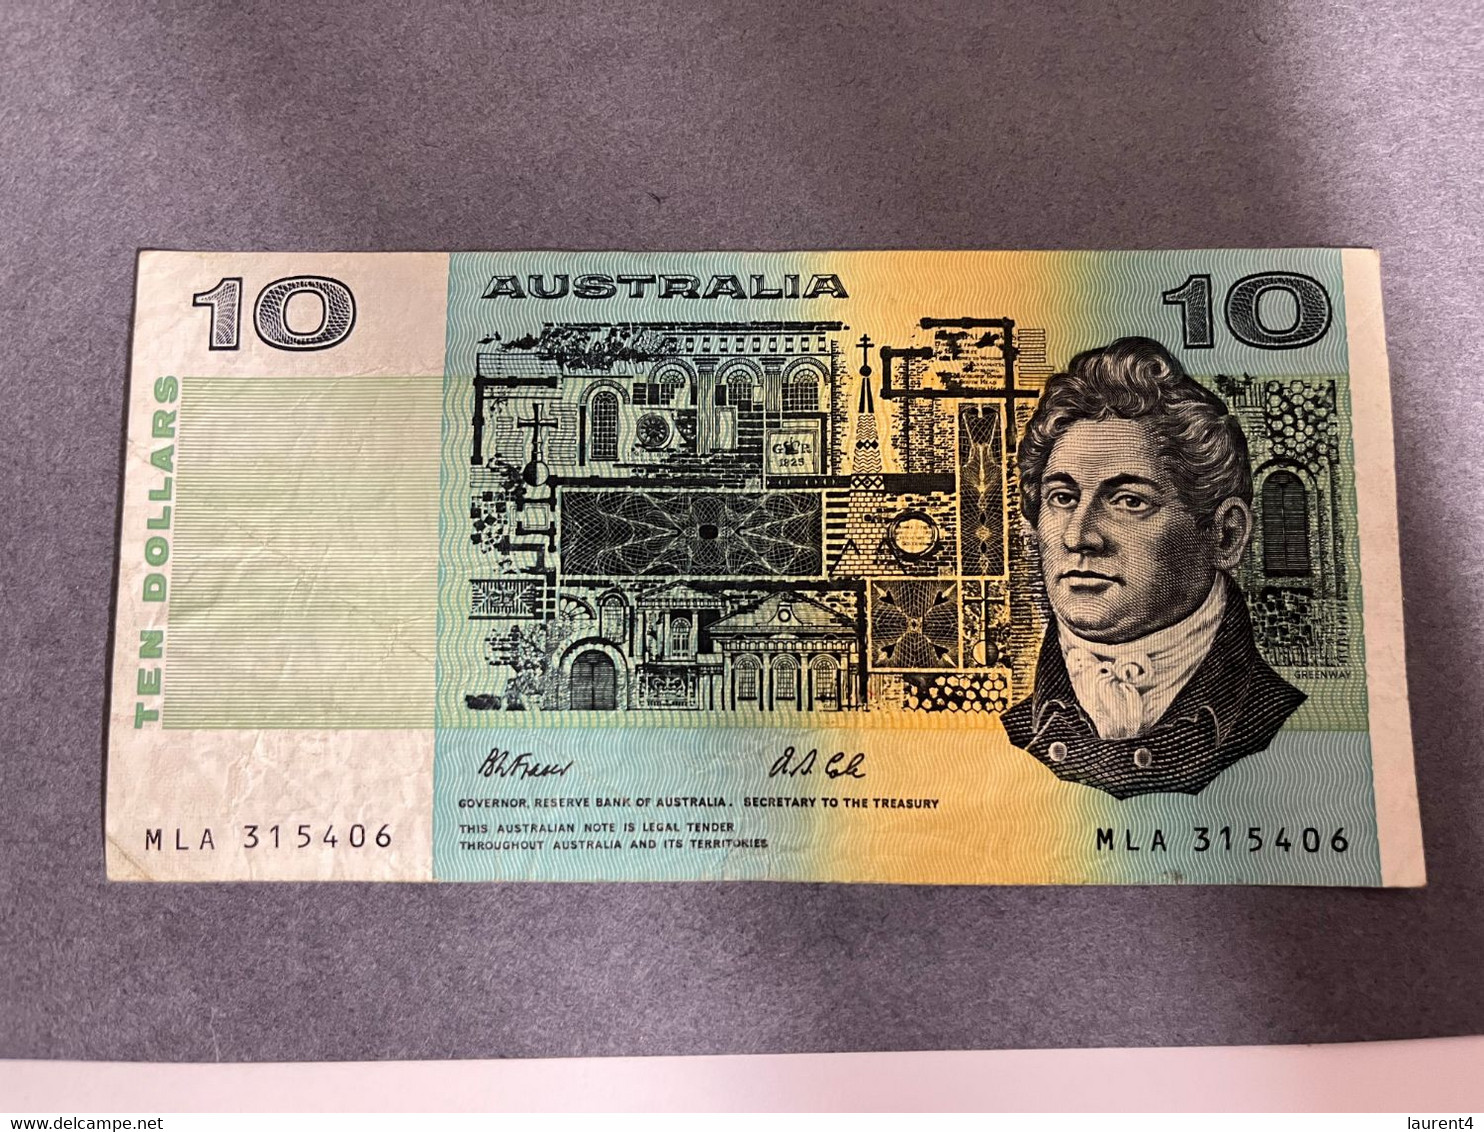 (1 N 3) Australia - $ 10.00 (older Henry Lawson) Banknote (MLA 315406) - 1966-72 Reserve Bank Of Australia